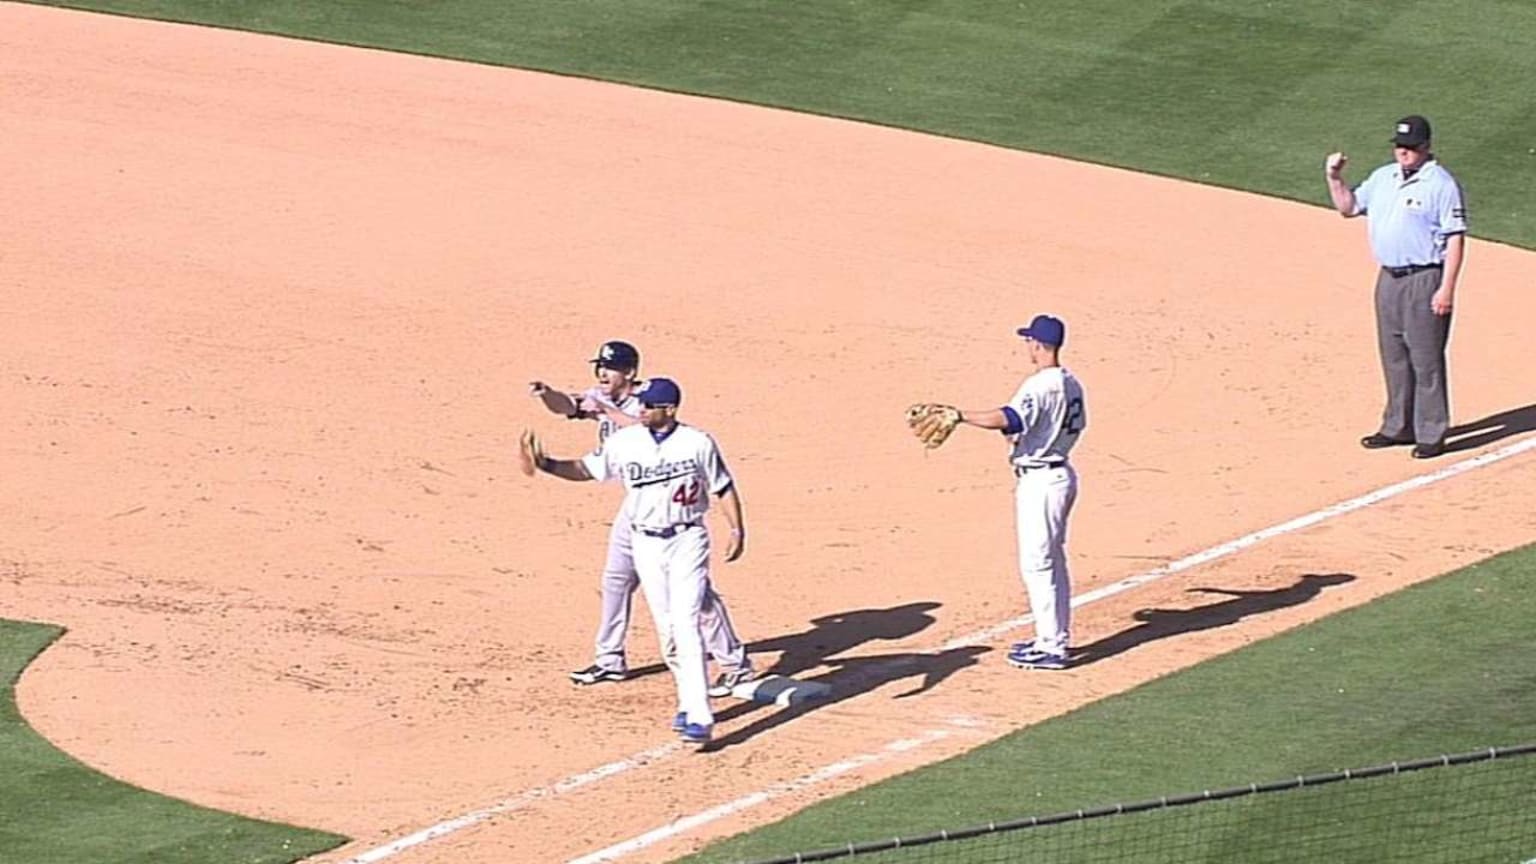 Photos of Dodgers baseball, 2012.